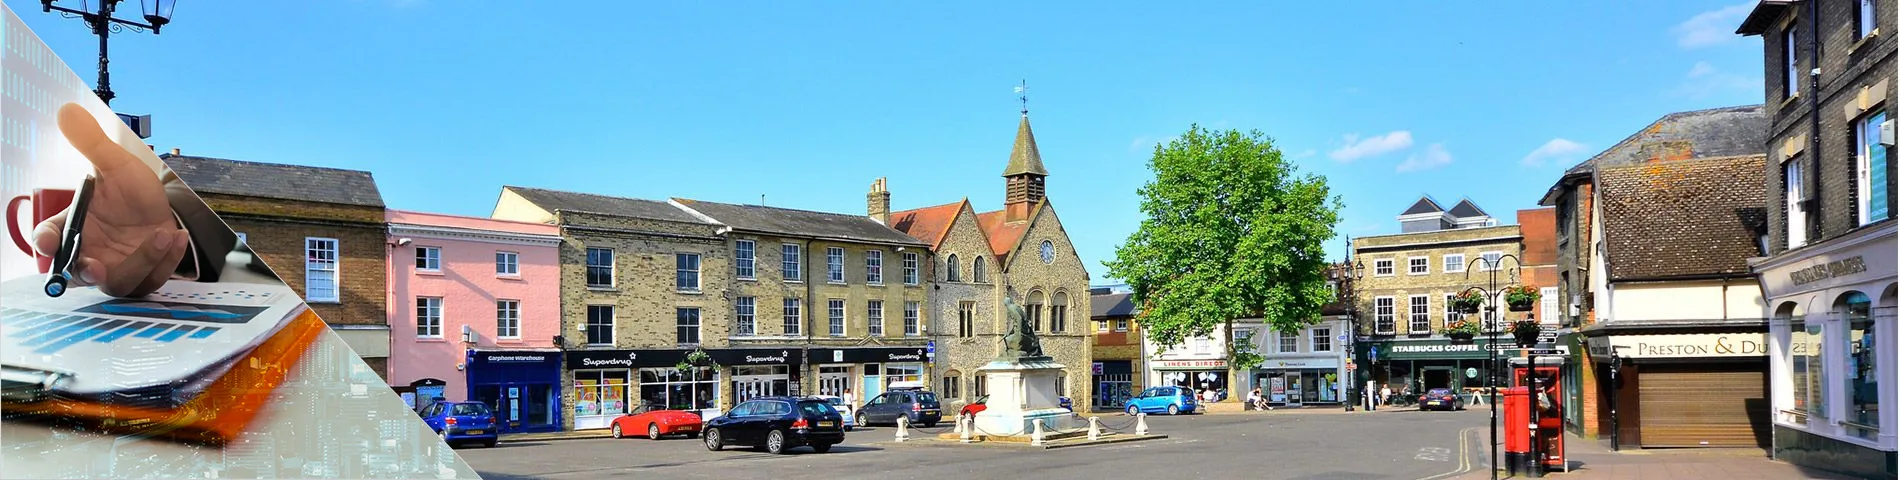 Bury St Edmunds - Banking & Finance